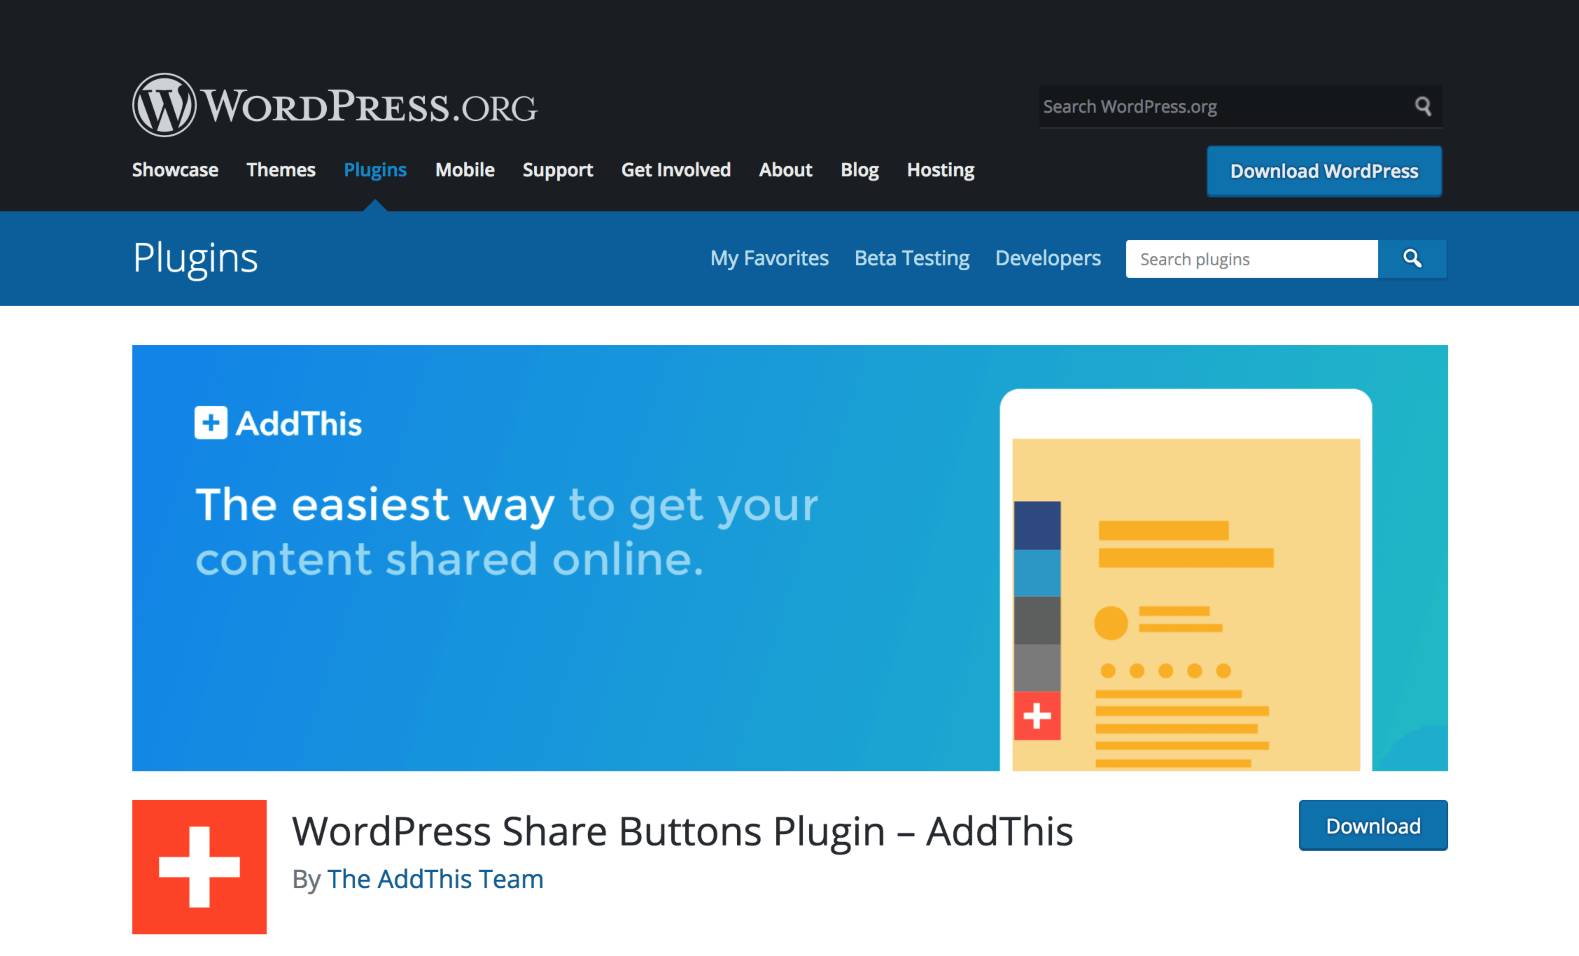 WordPress Share Buttons Plugin – AddThis